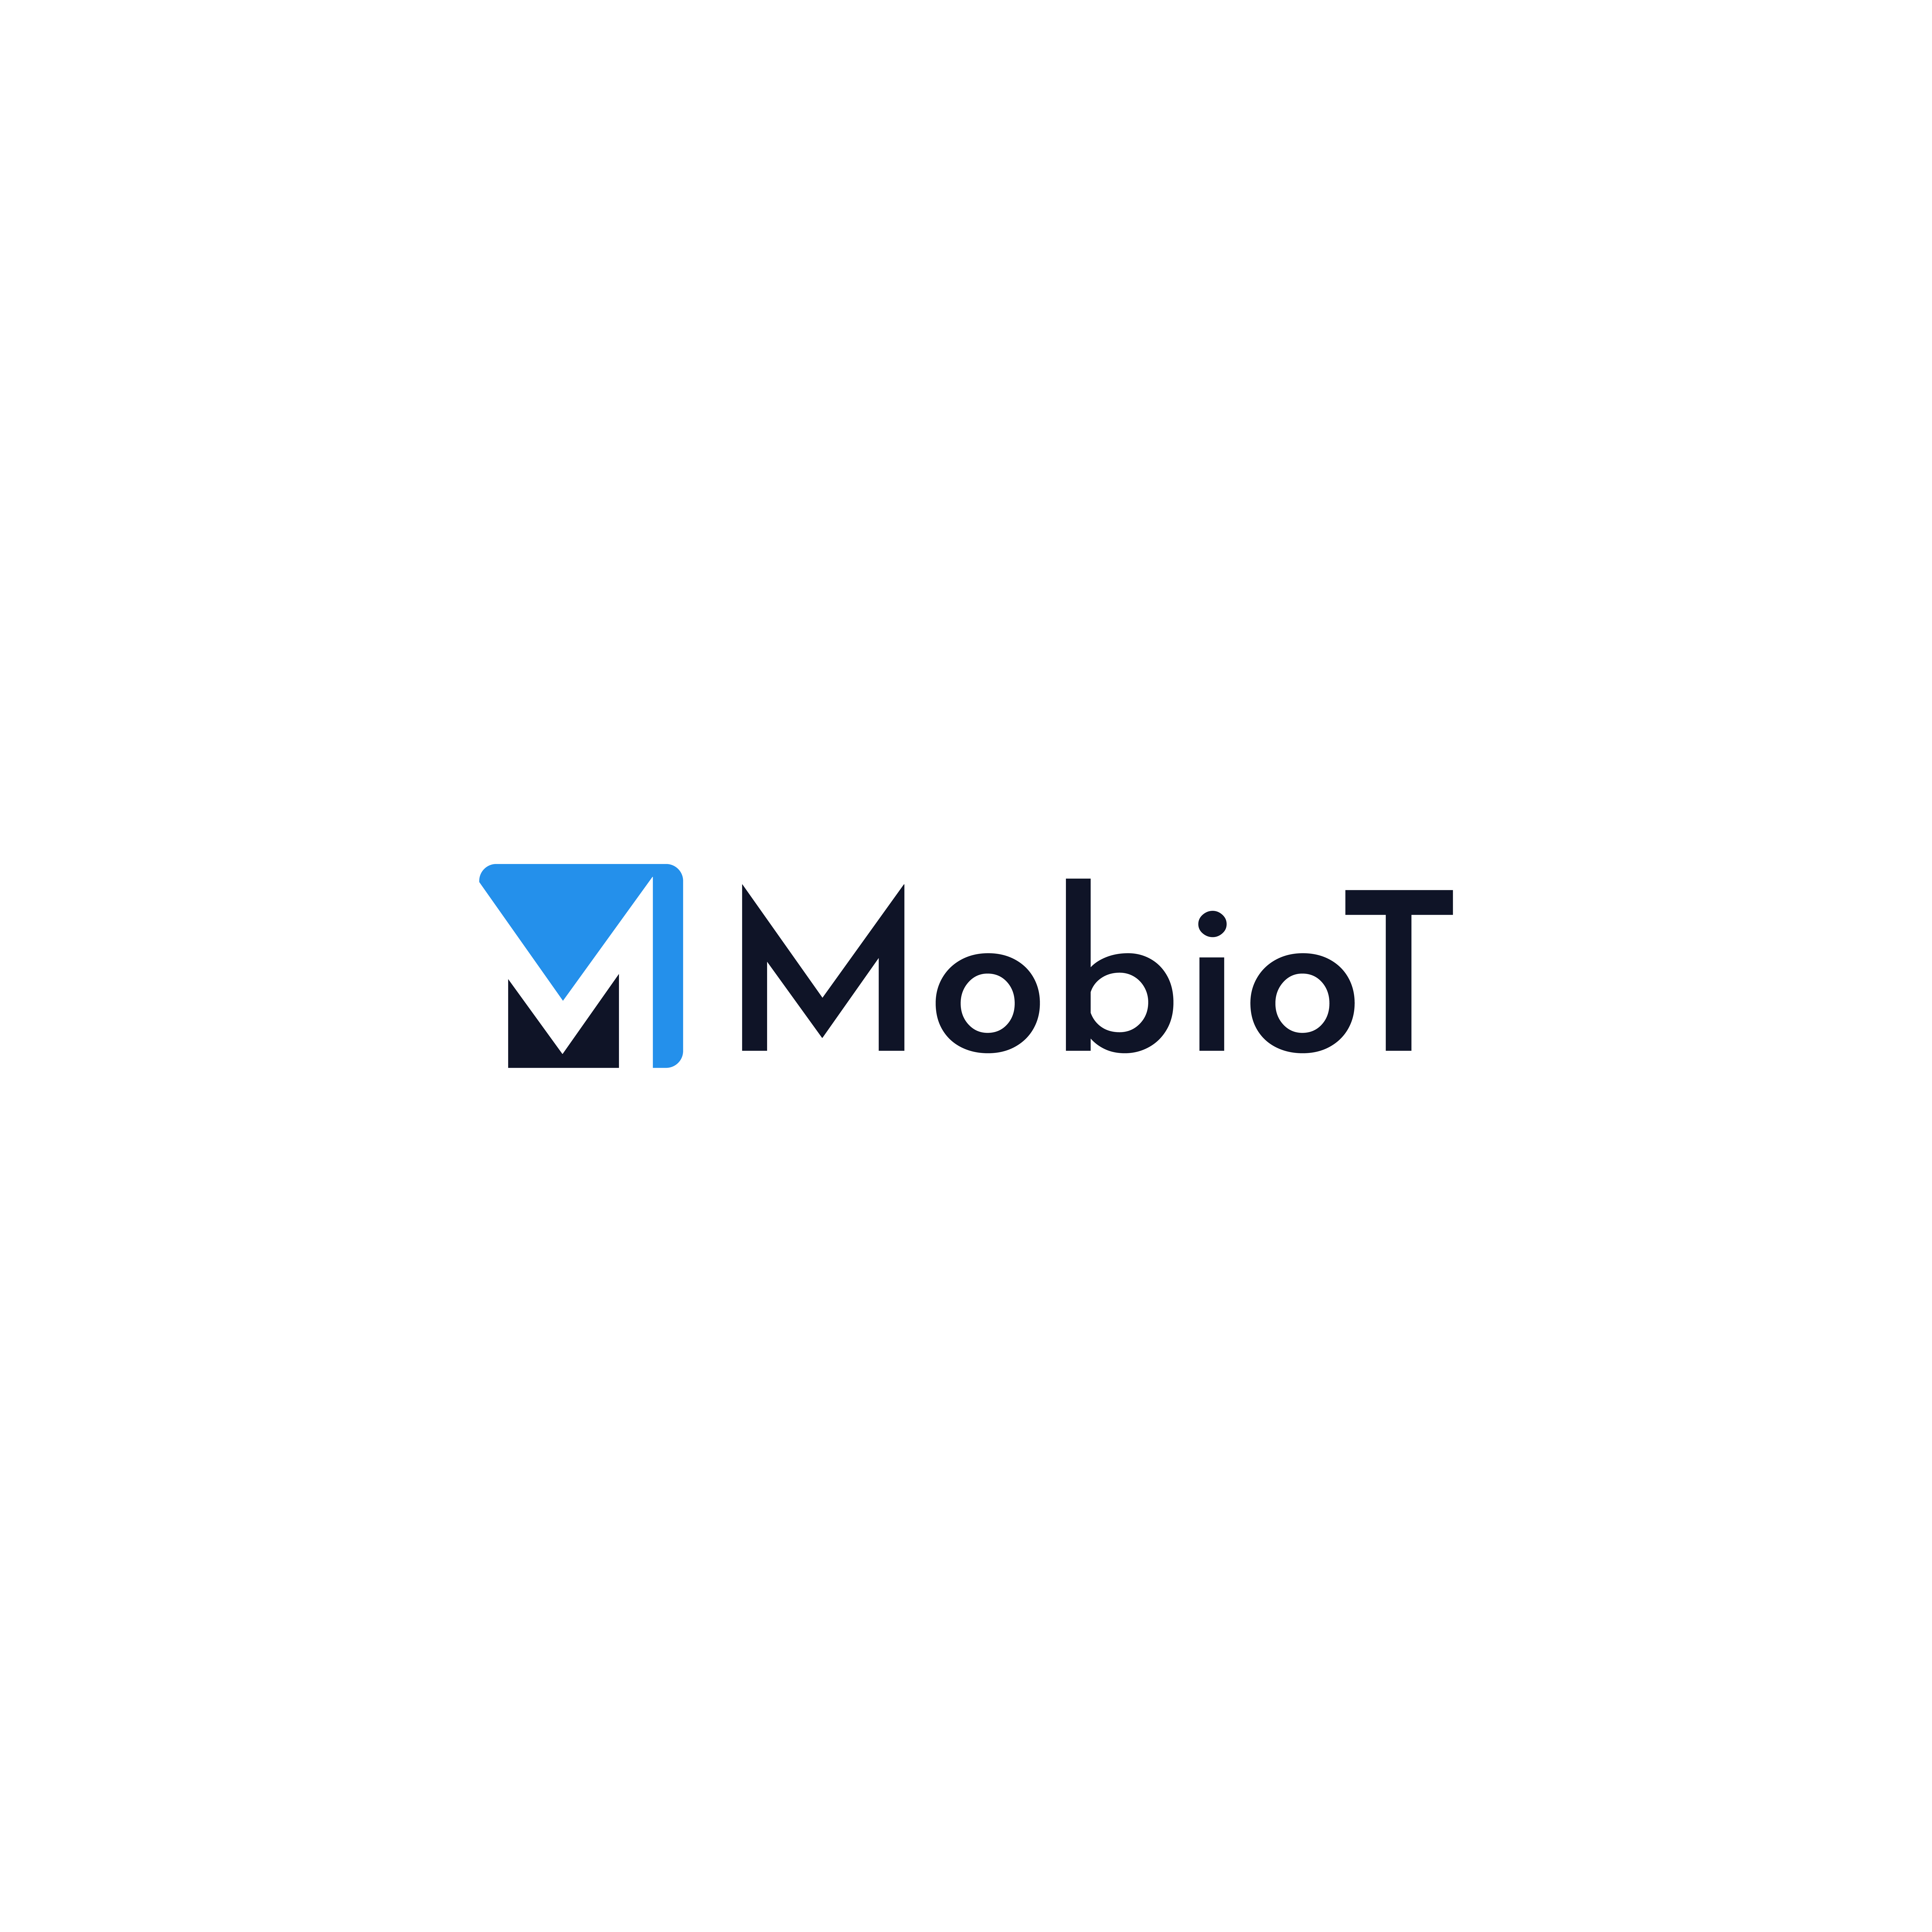 Mobiot